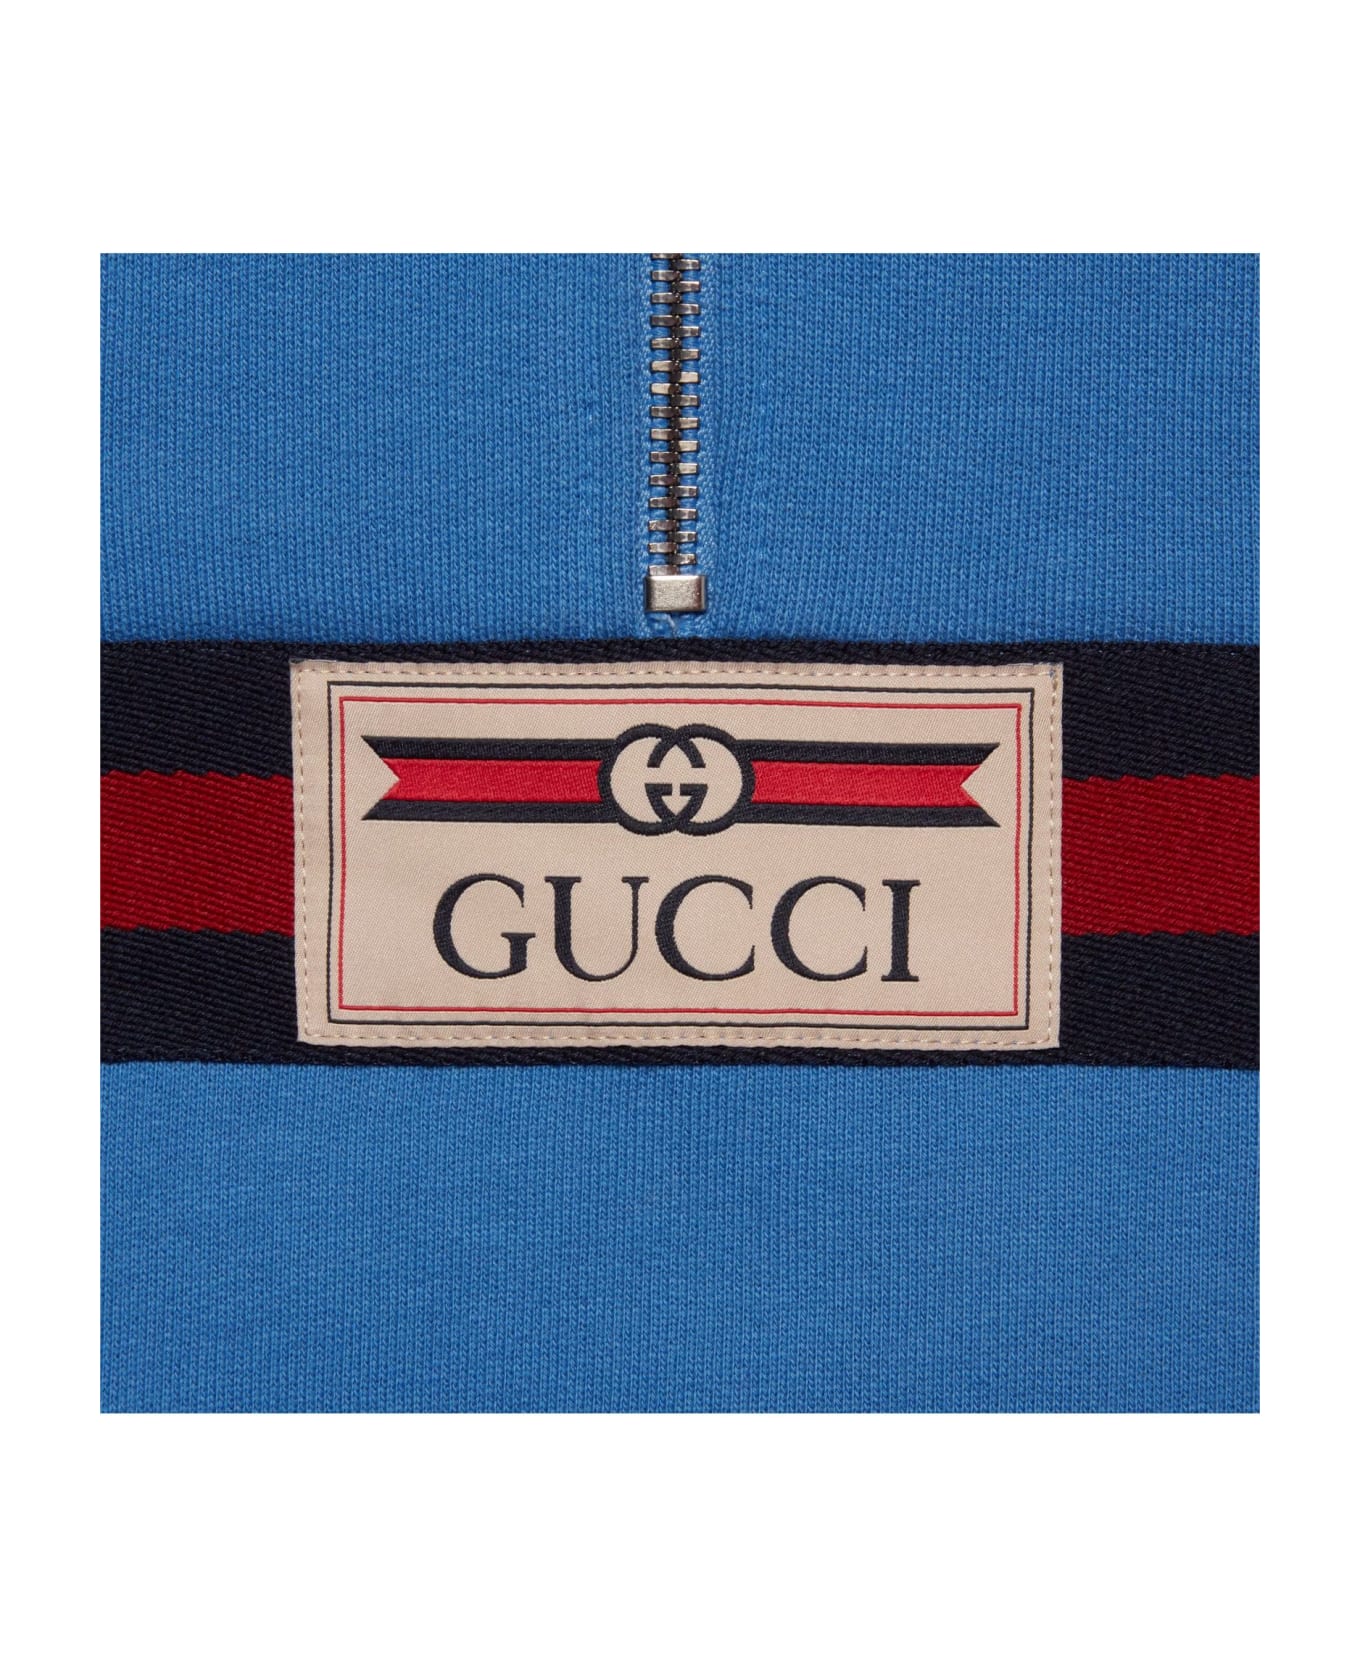 Gucci Children's Cotton Jacket With Gucci Label - LIGHT BLUE